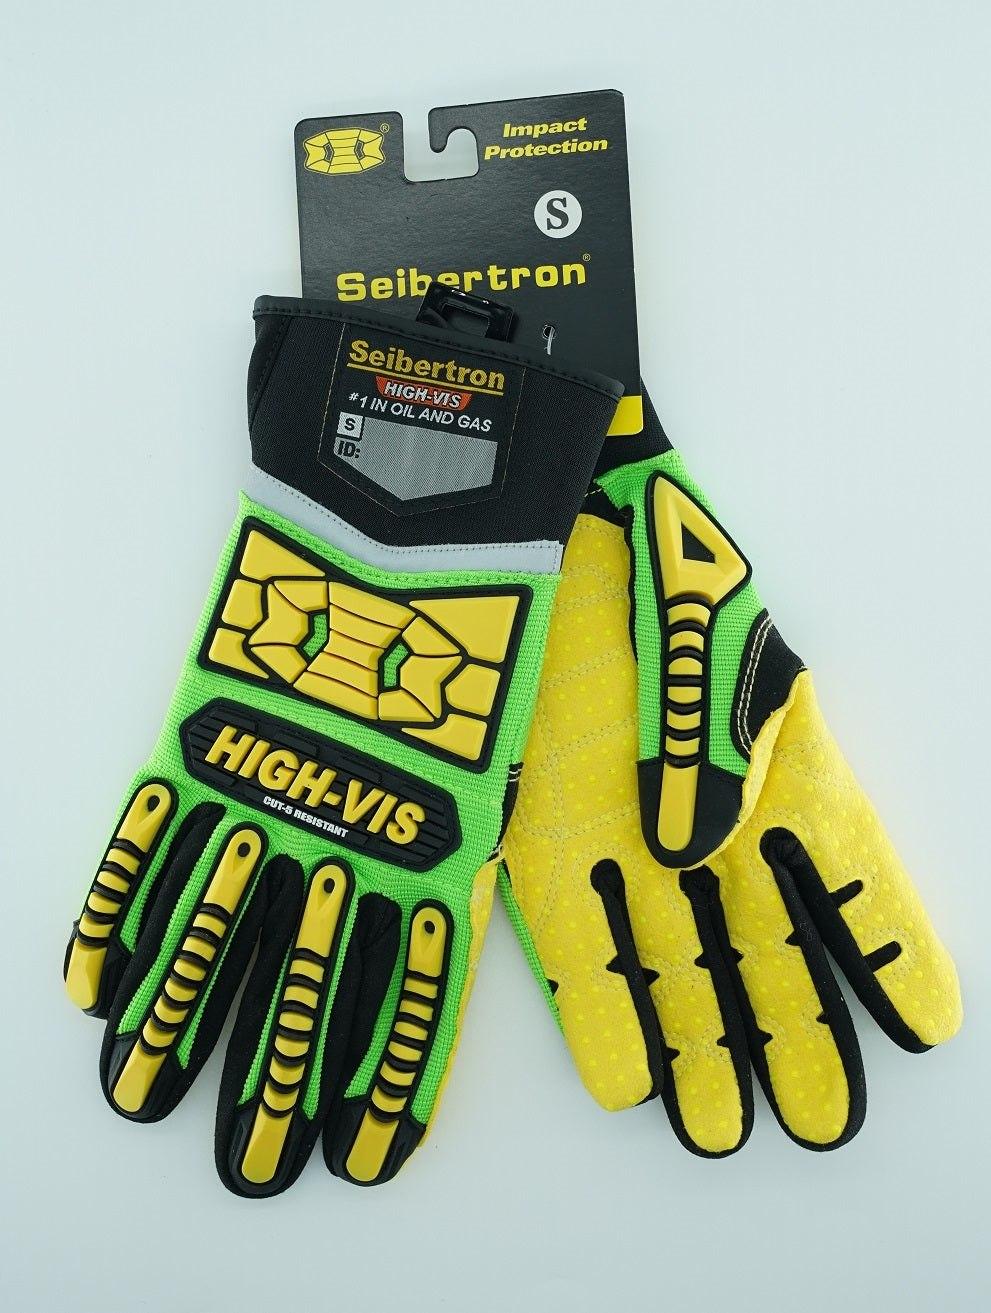 Seibertron High-Vis SDXC5 Mechanics Cut5 Impact Cut Puncture Resistant Gloves Oil and Gas/Oilfield Safety Gloves CE EN388 4543 XL